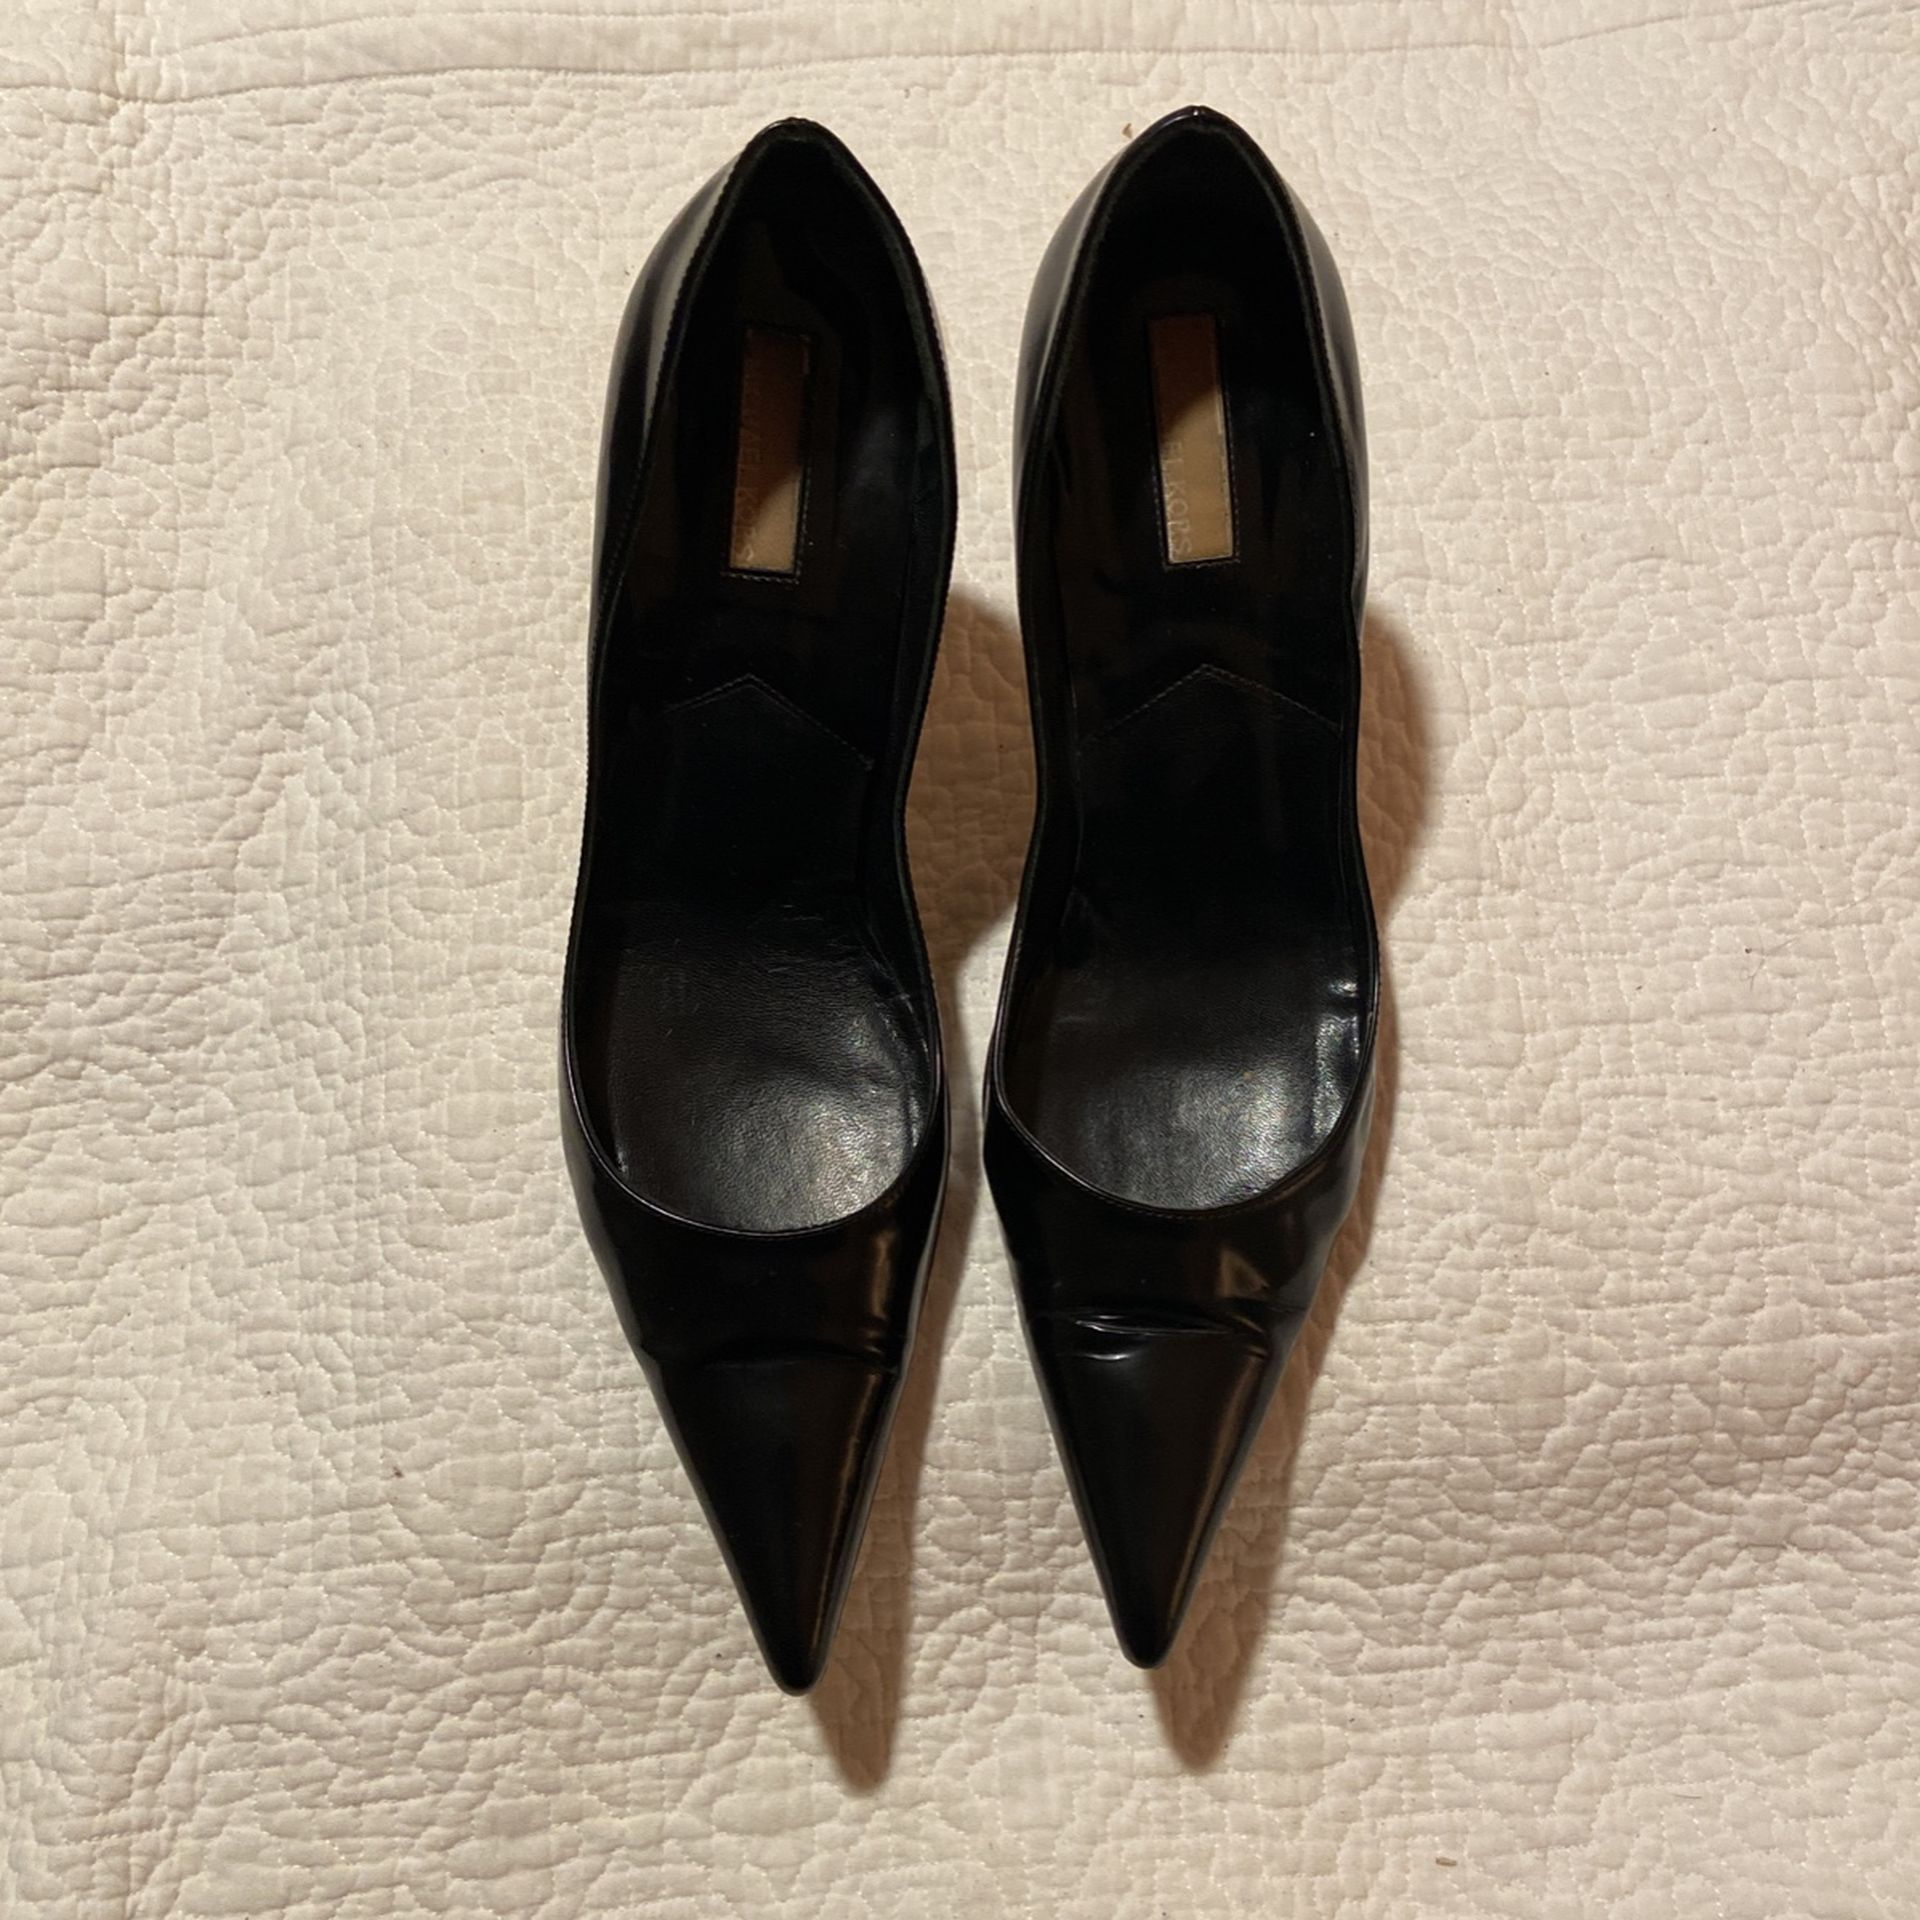 Michael Kors SEXY Black Stilettos With Silver Heel Size 8.5M